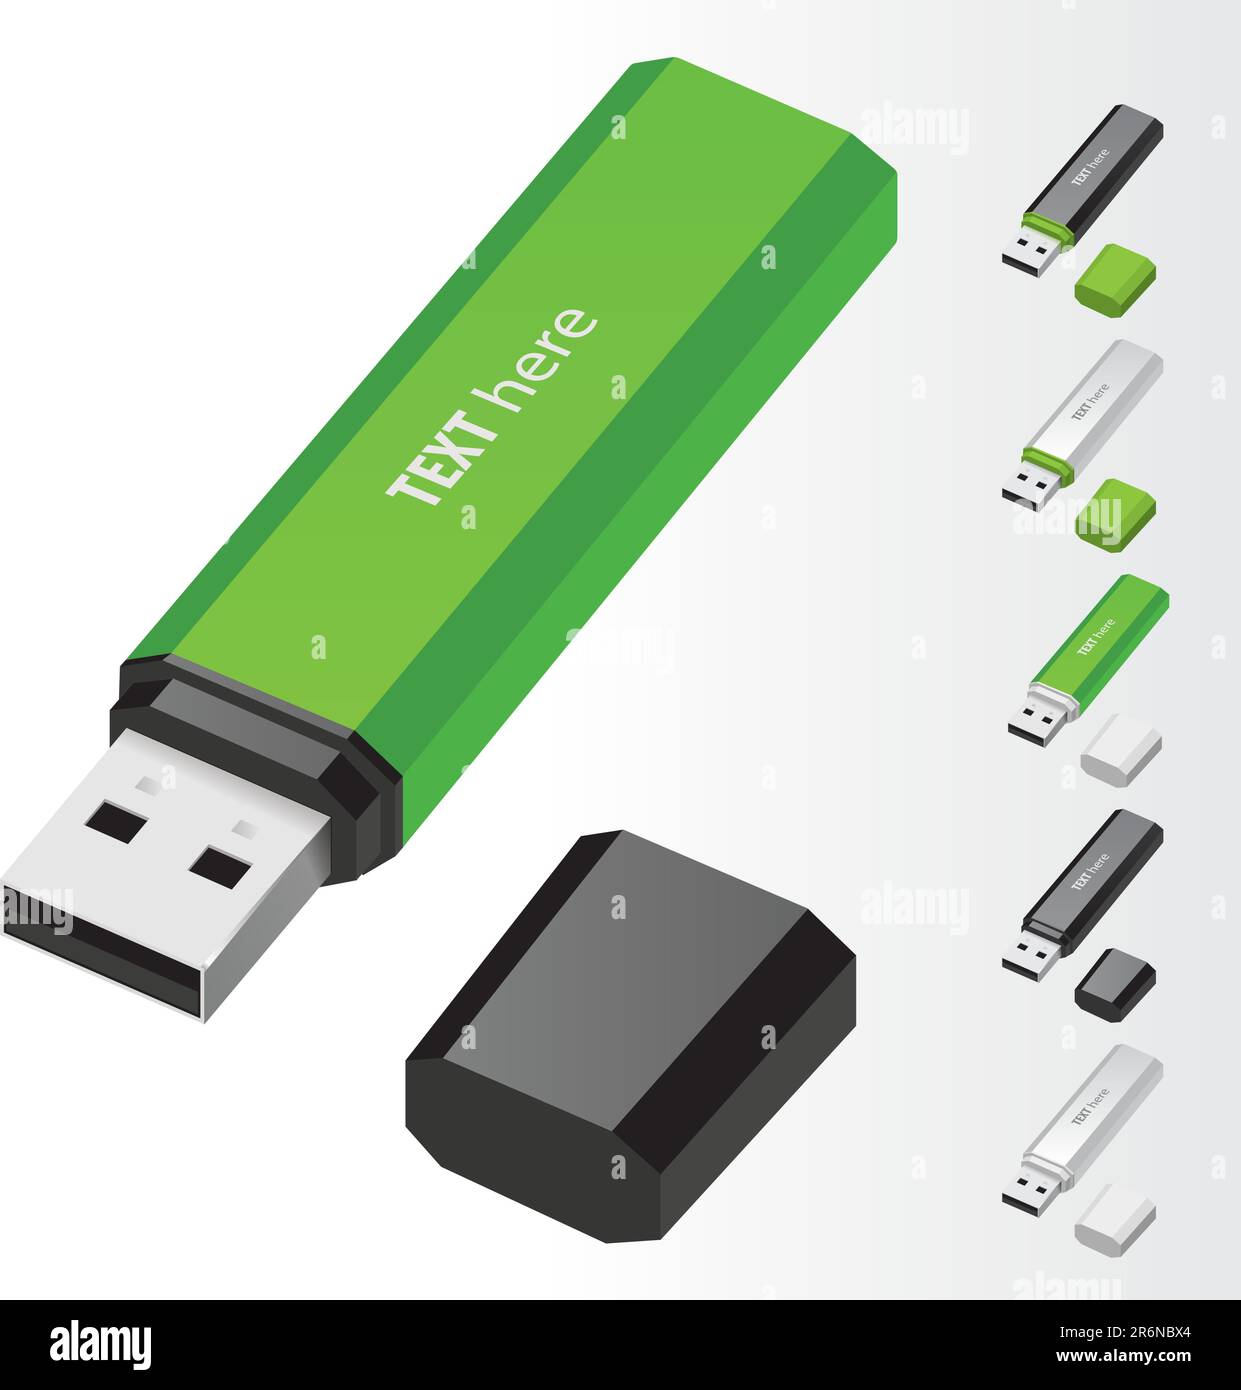 Green USB Flash Drive vector icons Stock Vector